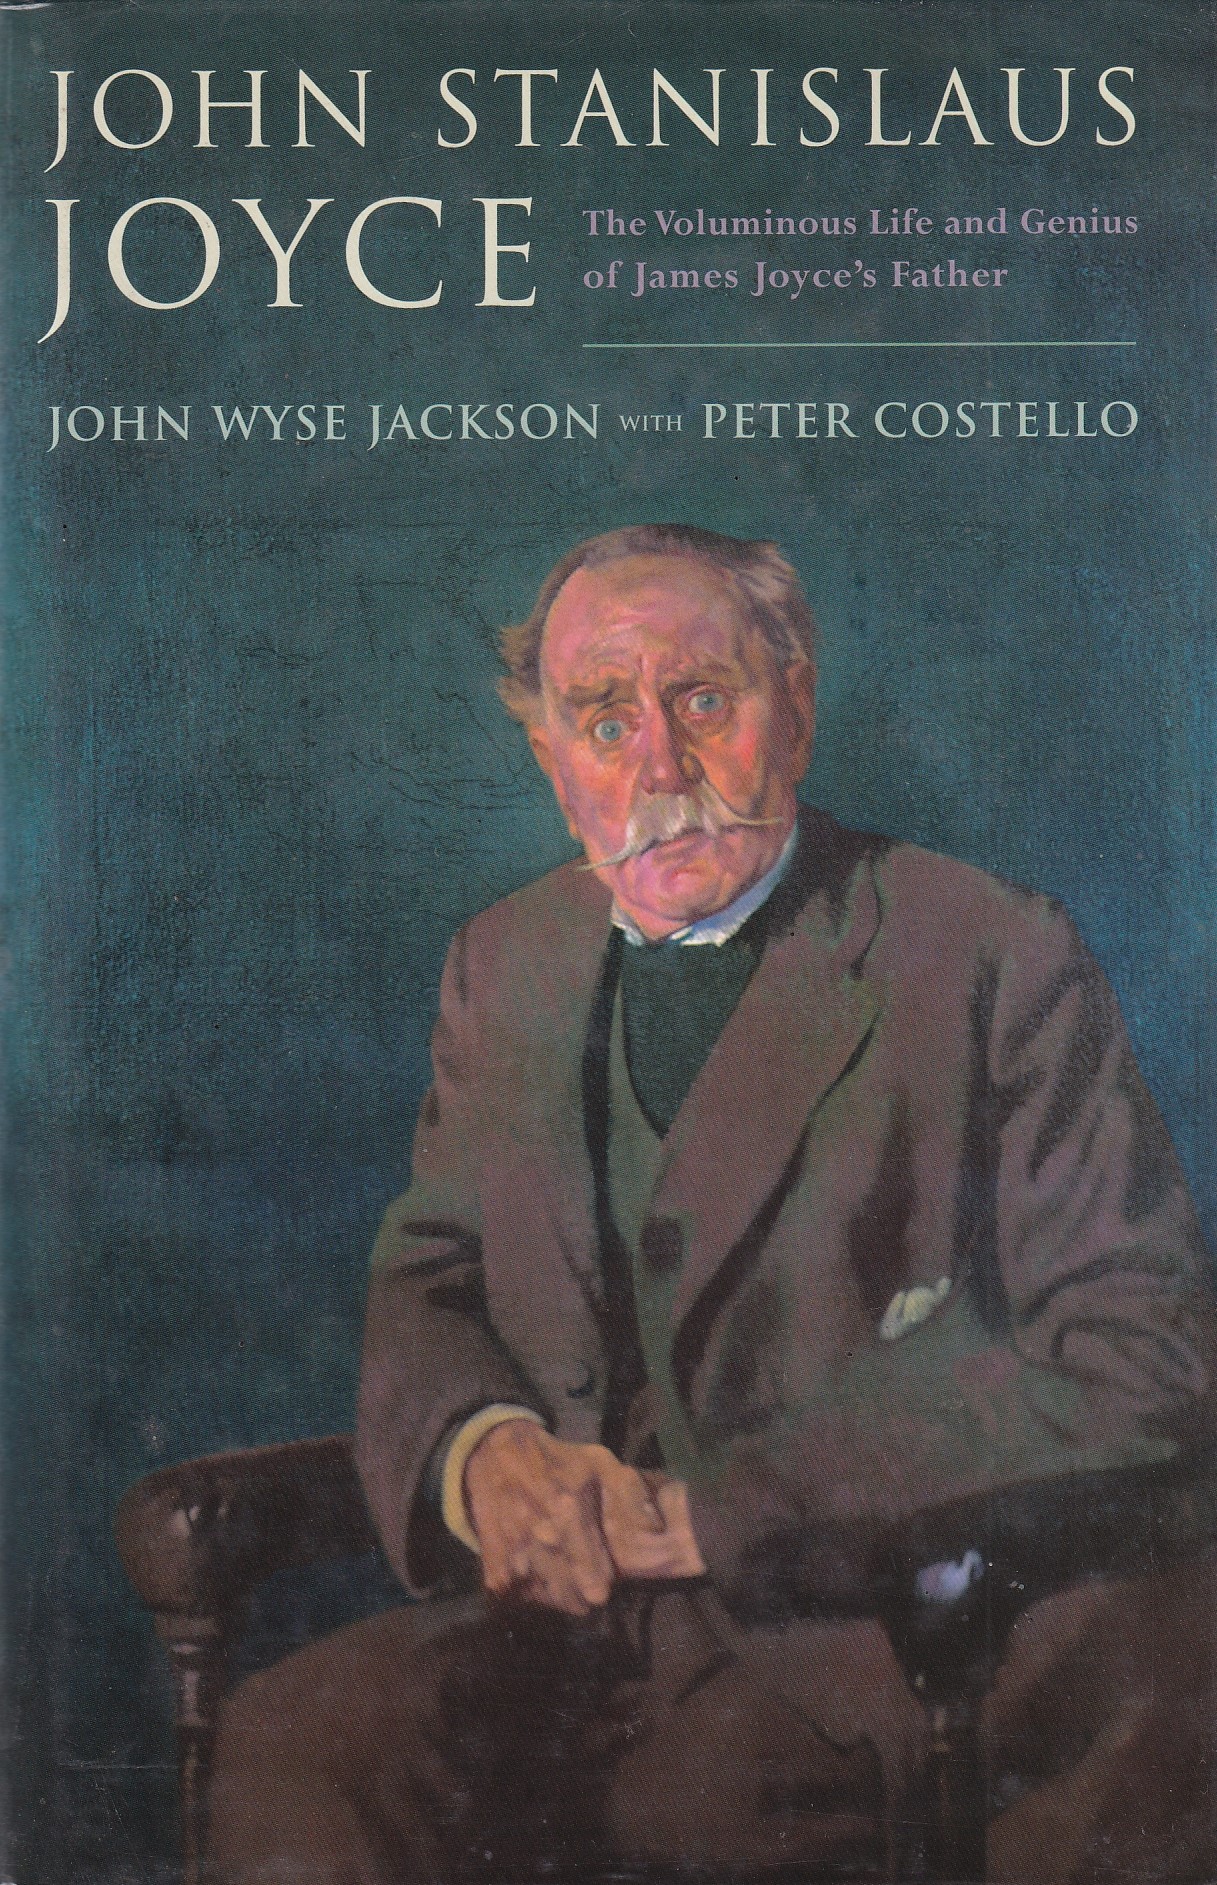 John Stanislaus Joyce: The Voluminous Life and Genius of James Joyce’s Father | John Wyse Jackson with Peter Costello | Charlie Byrne's